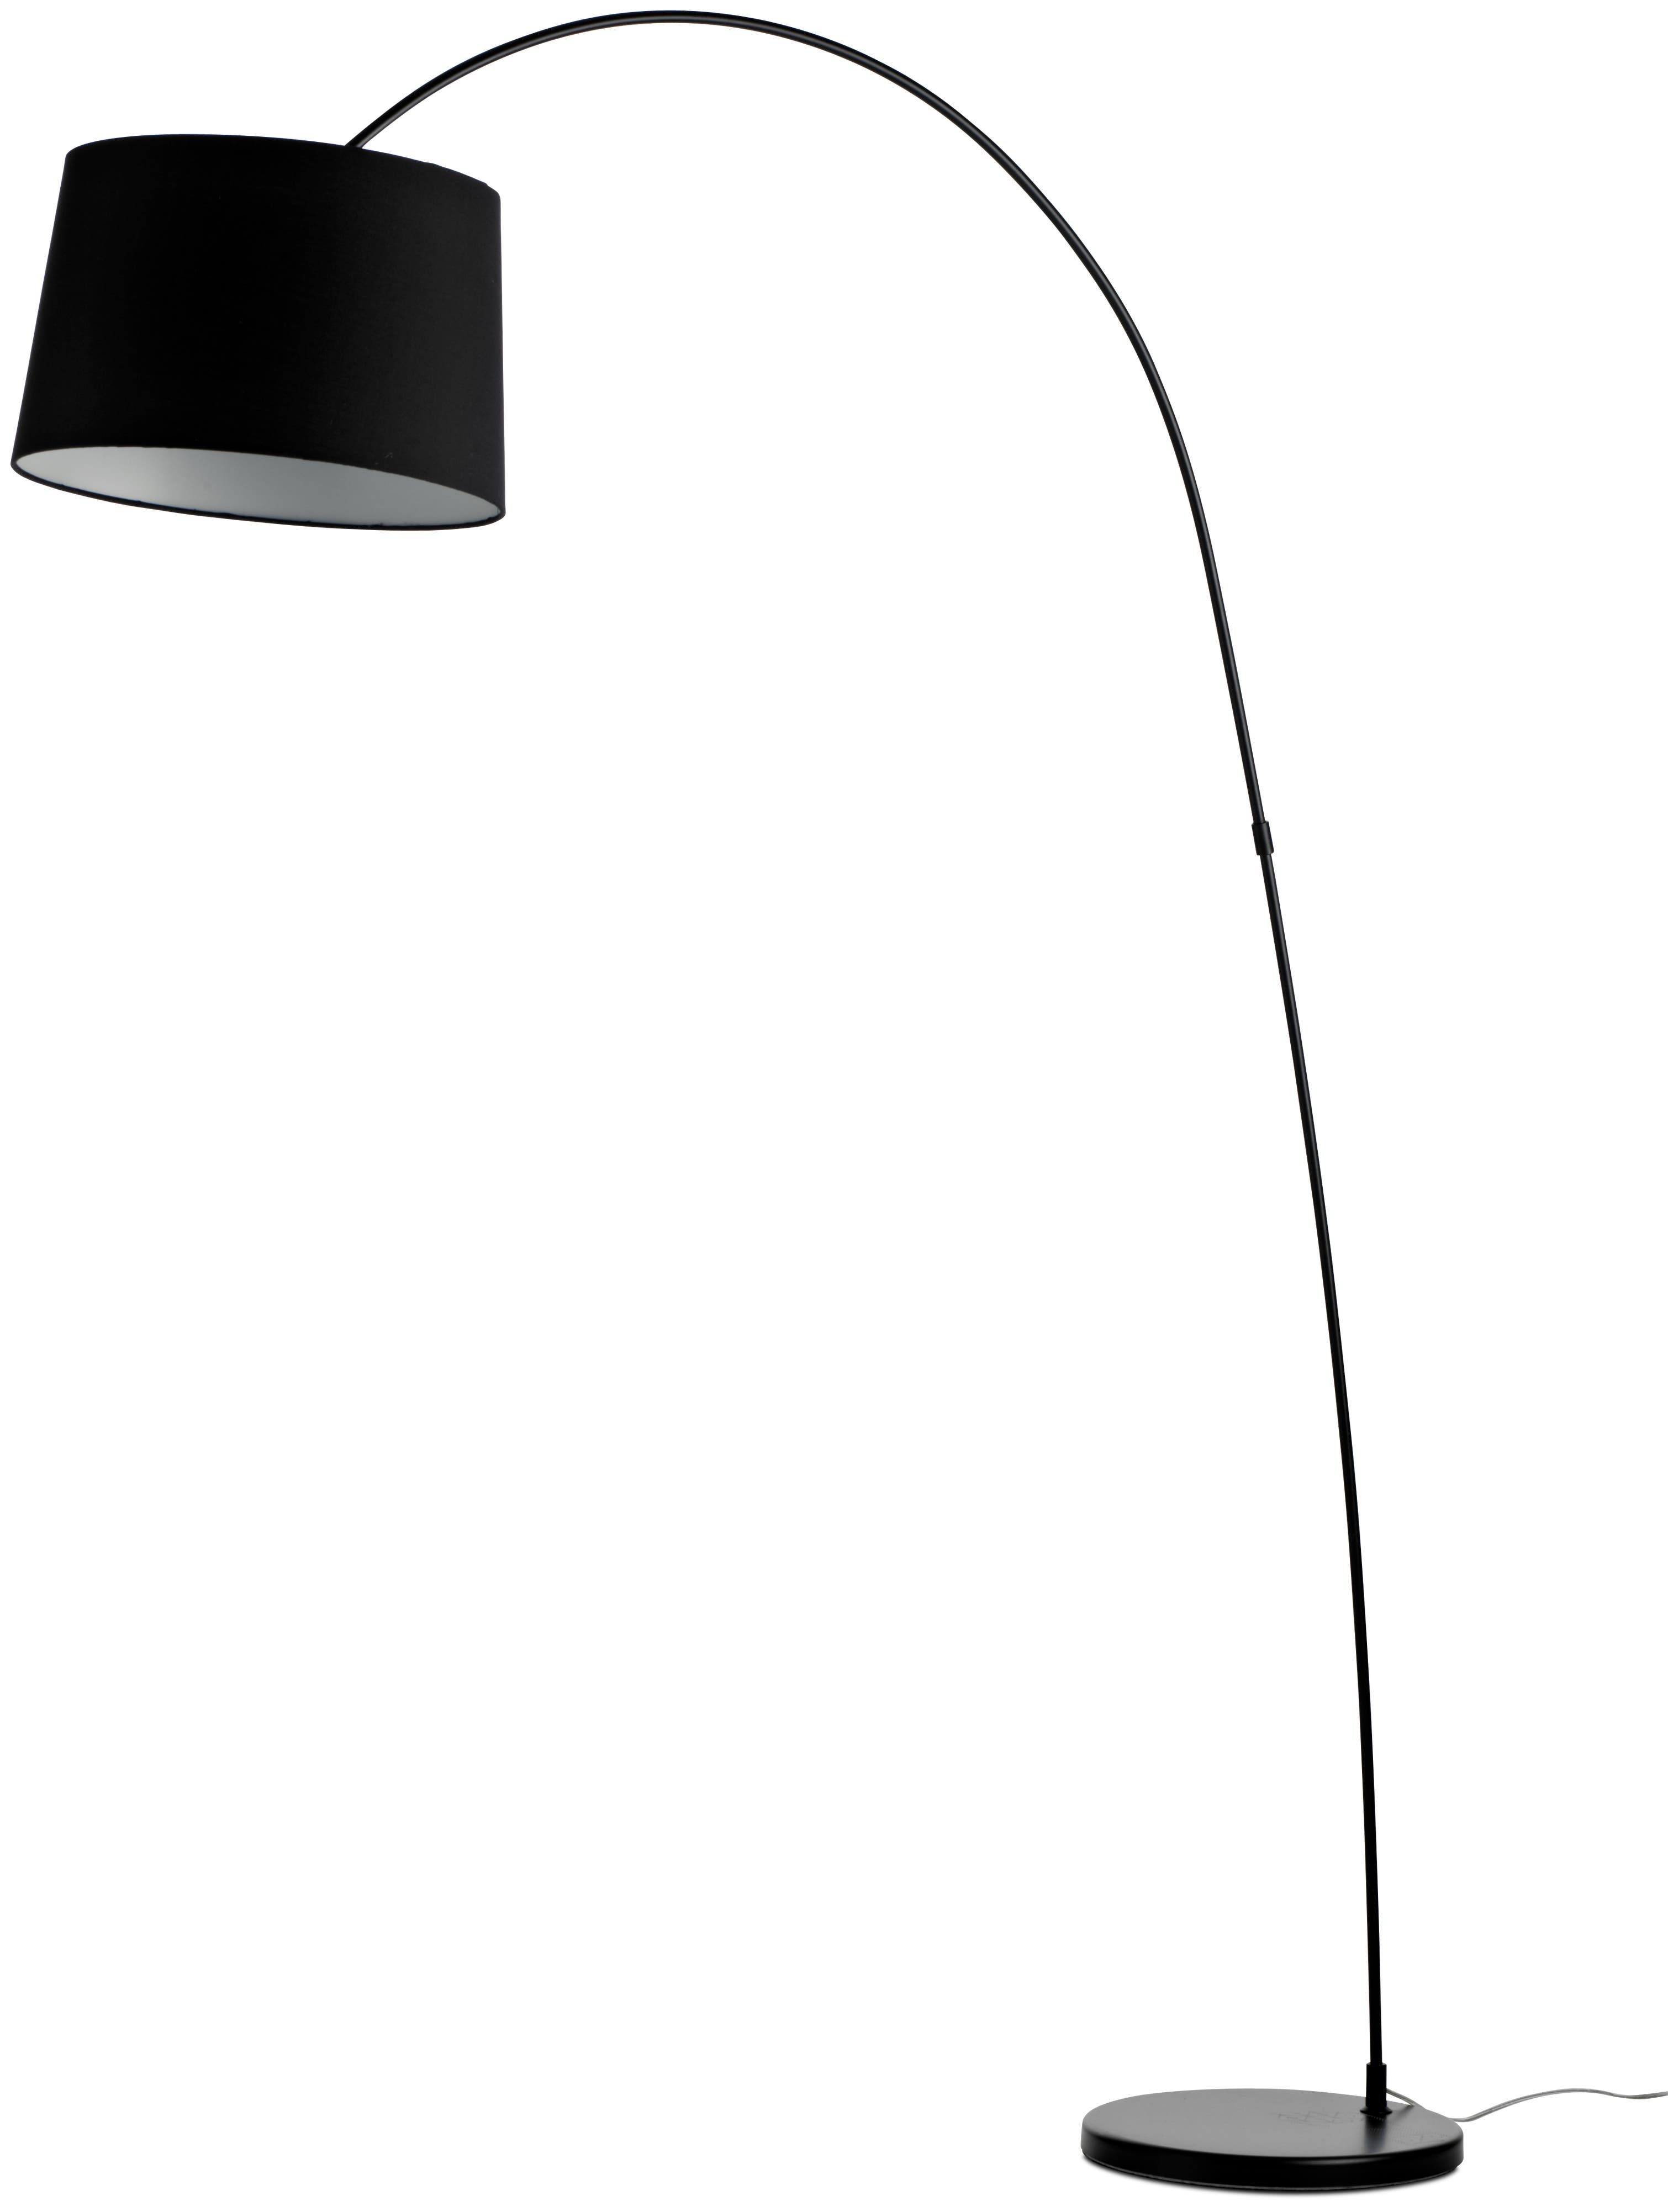 Kuta floor lamp